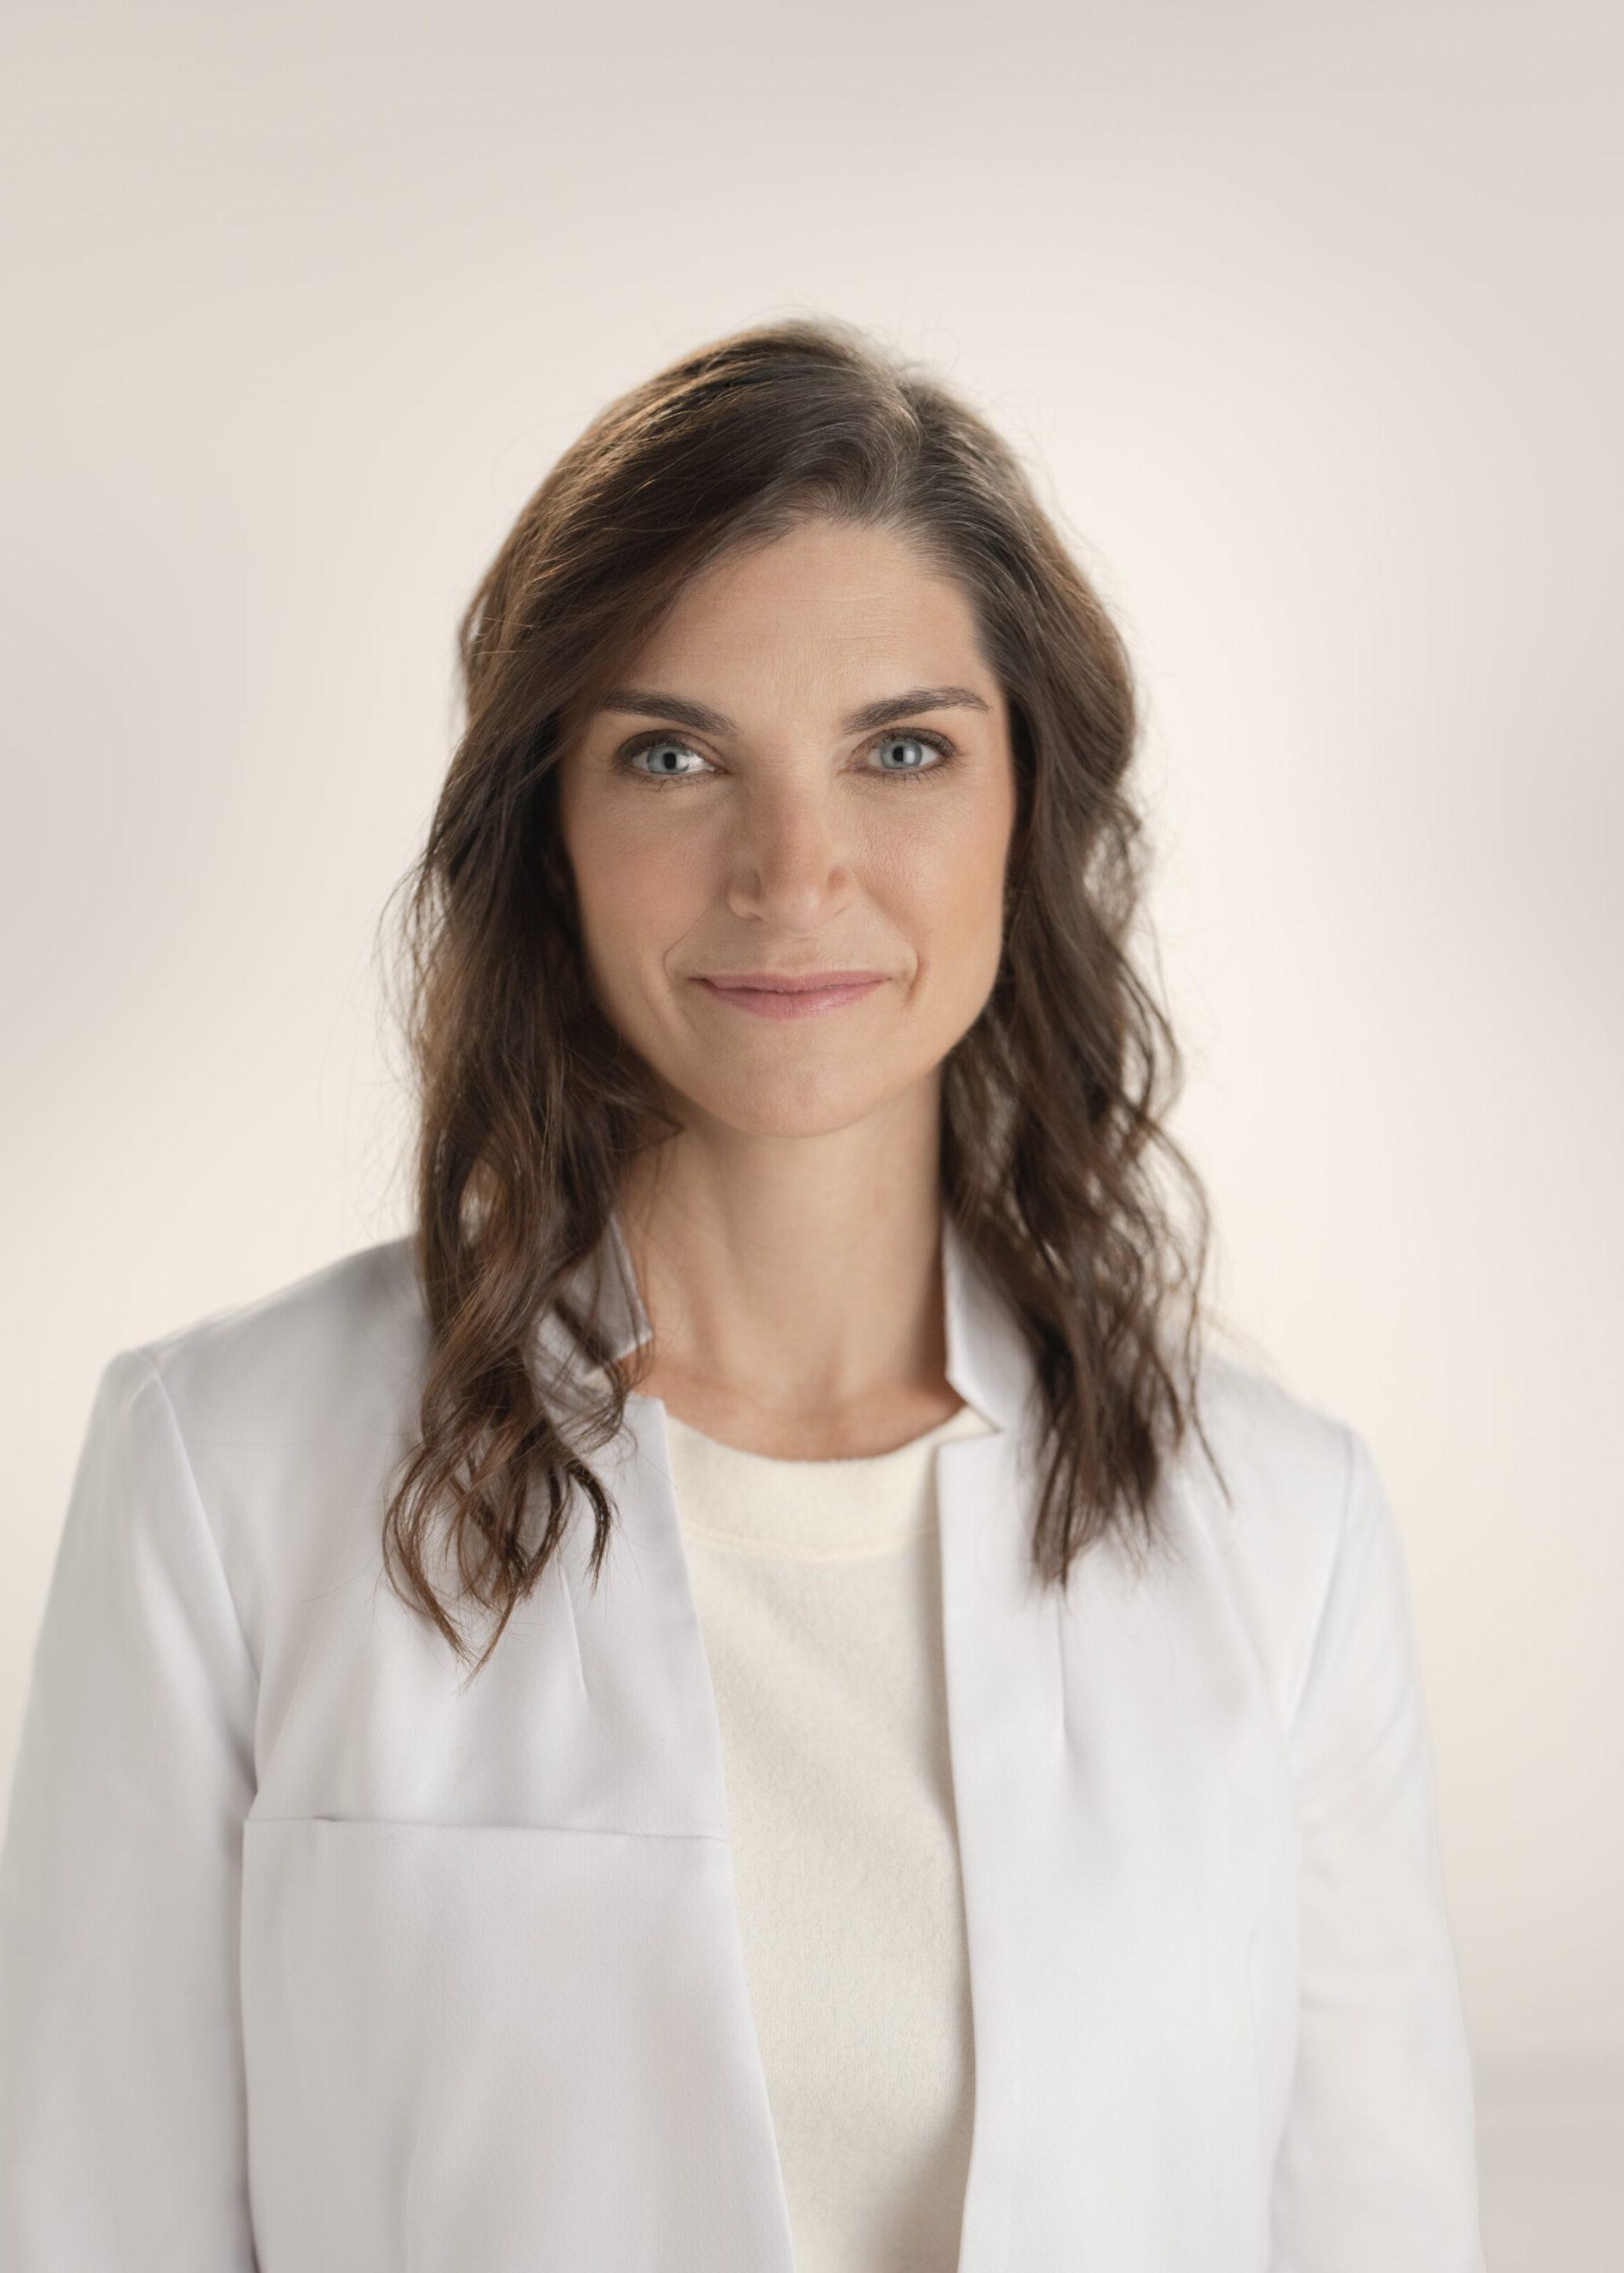 Functional Medicine Expert, Dr. Marguerite Weston